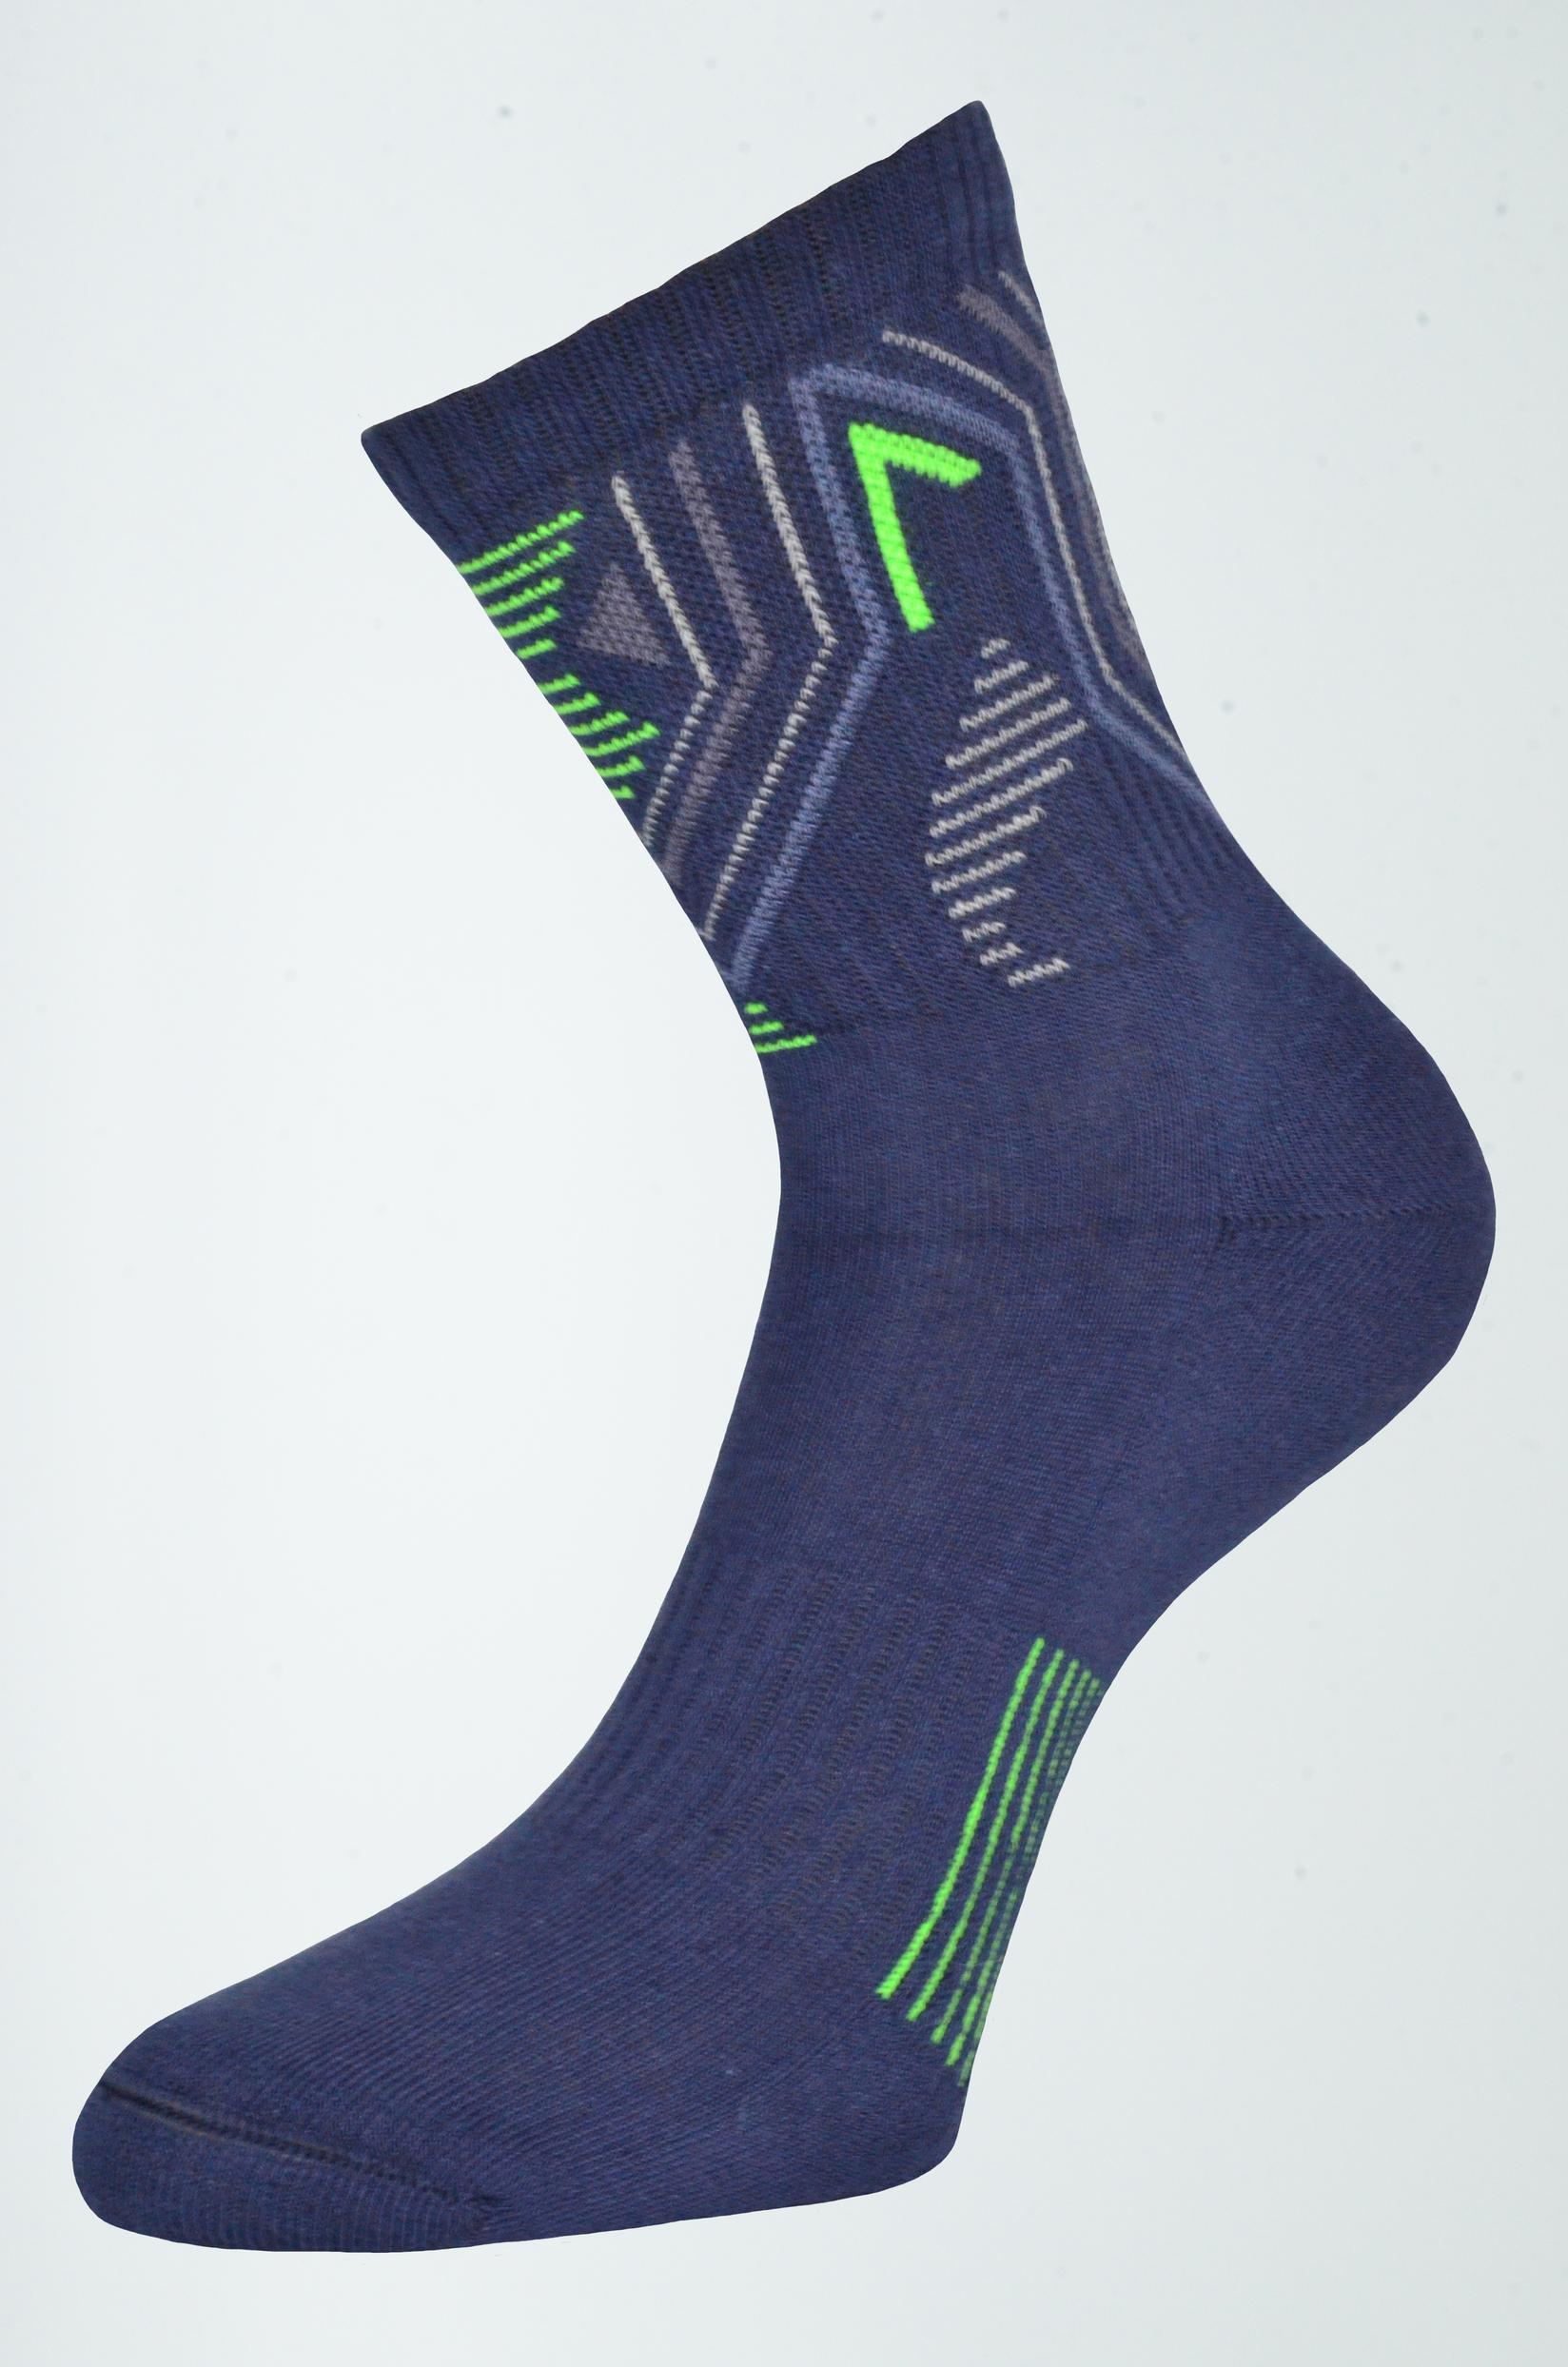 Selected image for GERBI Sportske čarape Sport Style   45-47 m9 teget